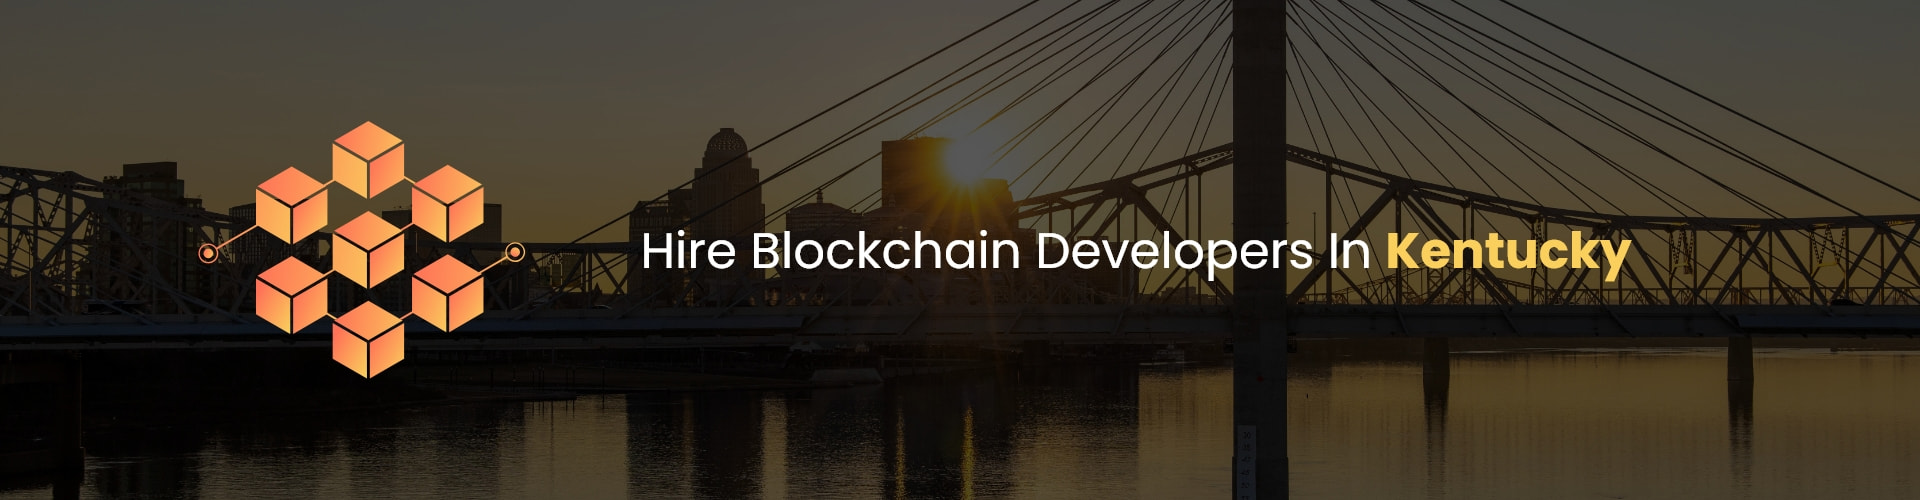 hire blockchain developers in kentucky